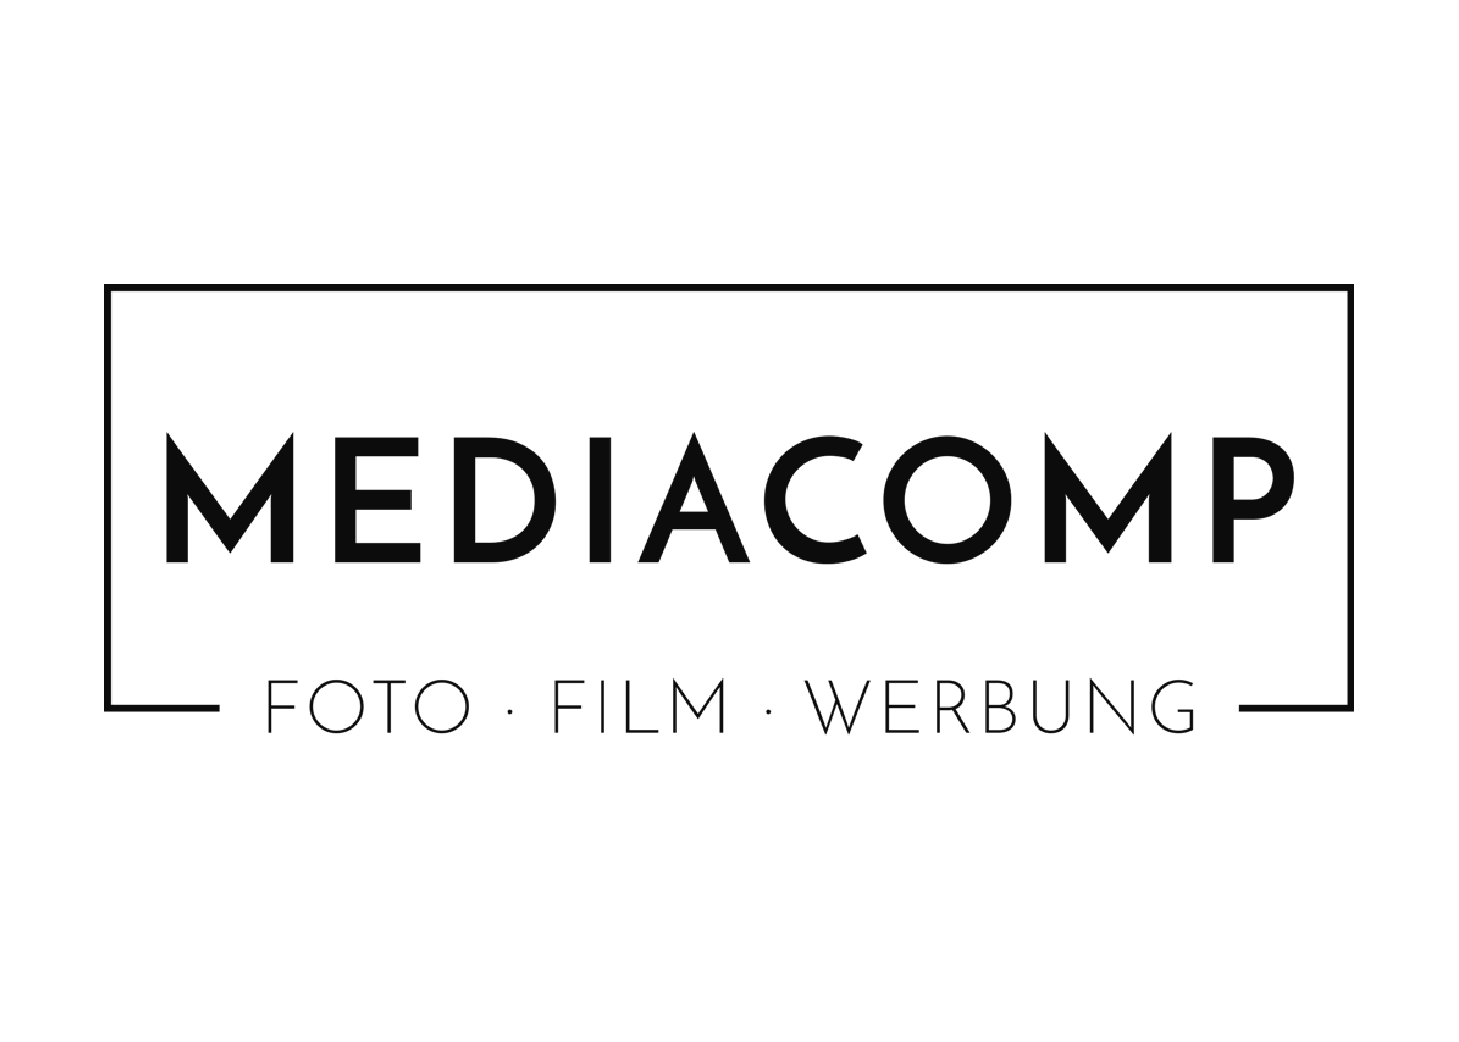 mediacomp logo